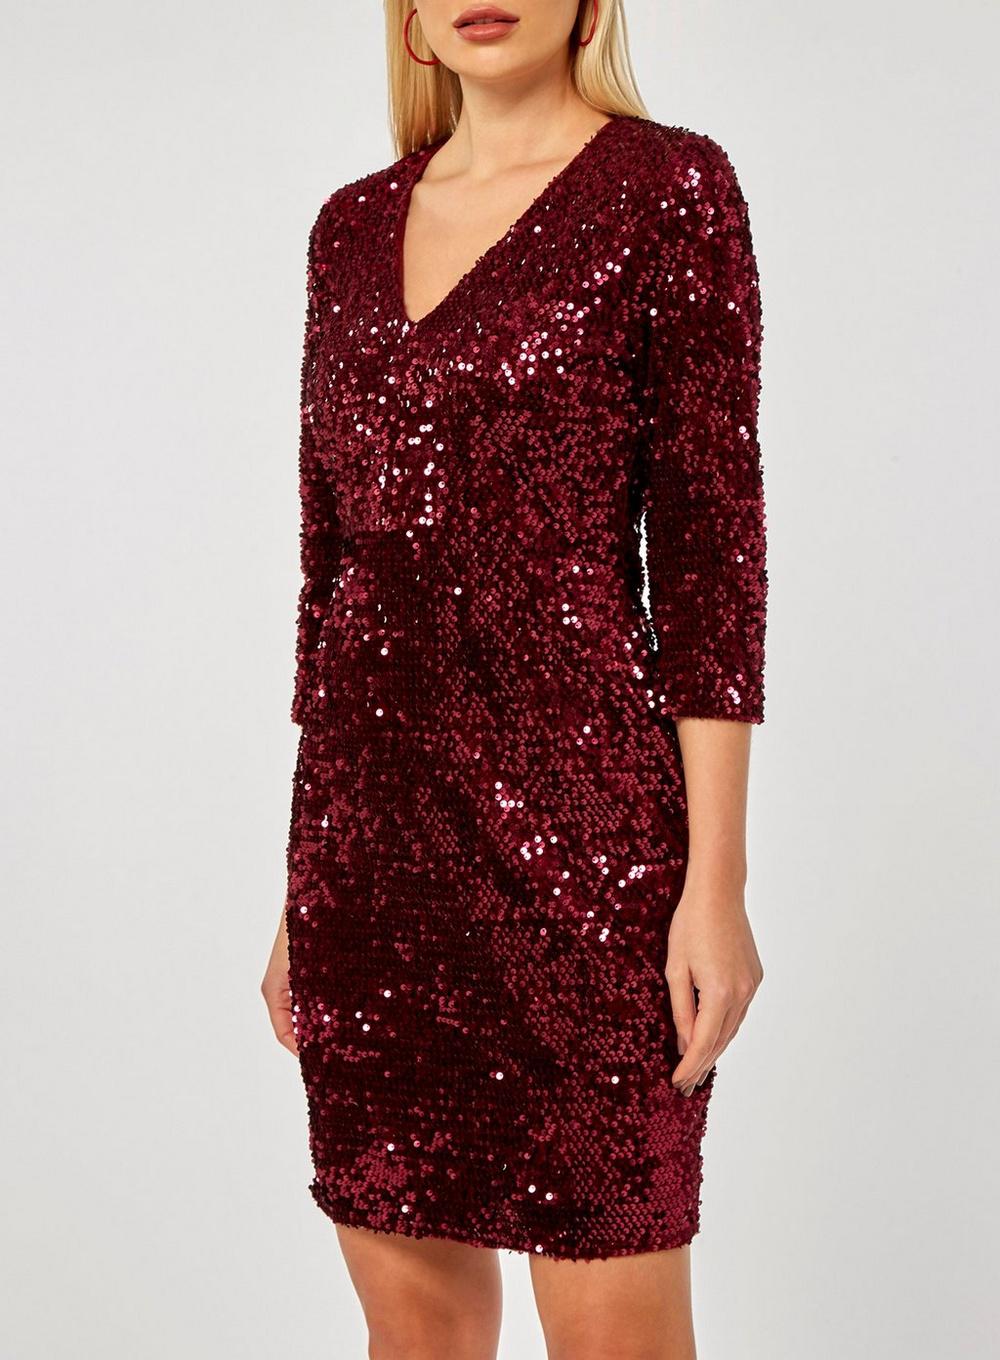 Lyst - Dorothy Perkins Pink Velvet Sequin Bodycon Dress in Pink - Save 7%